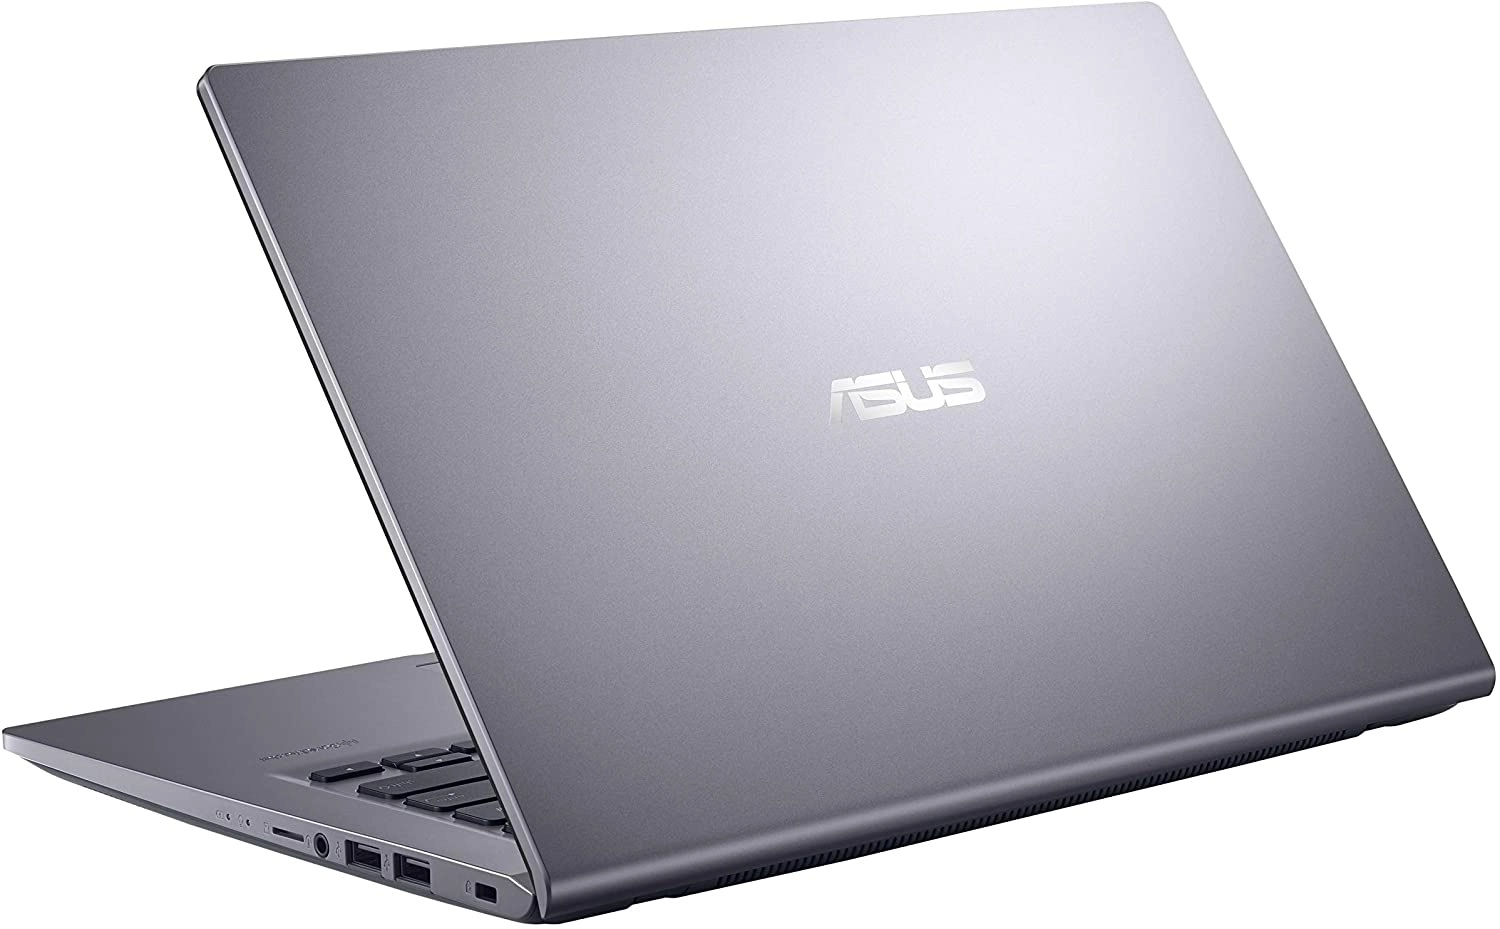 Asus F415JA-EB501T laptop image